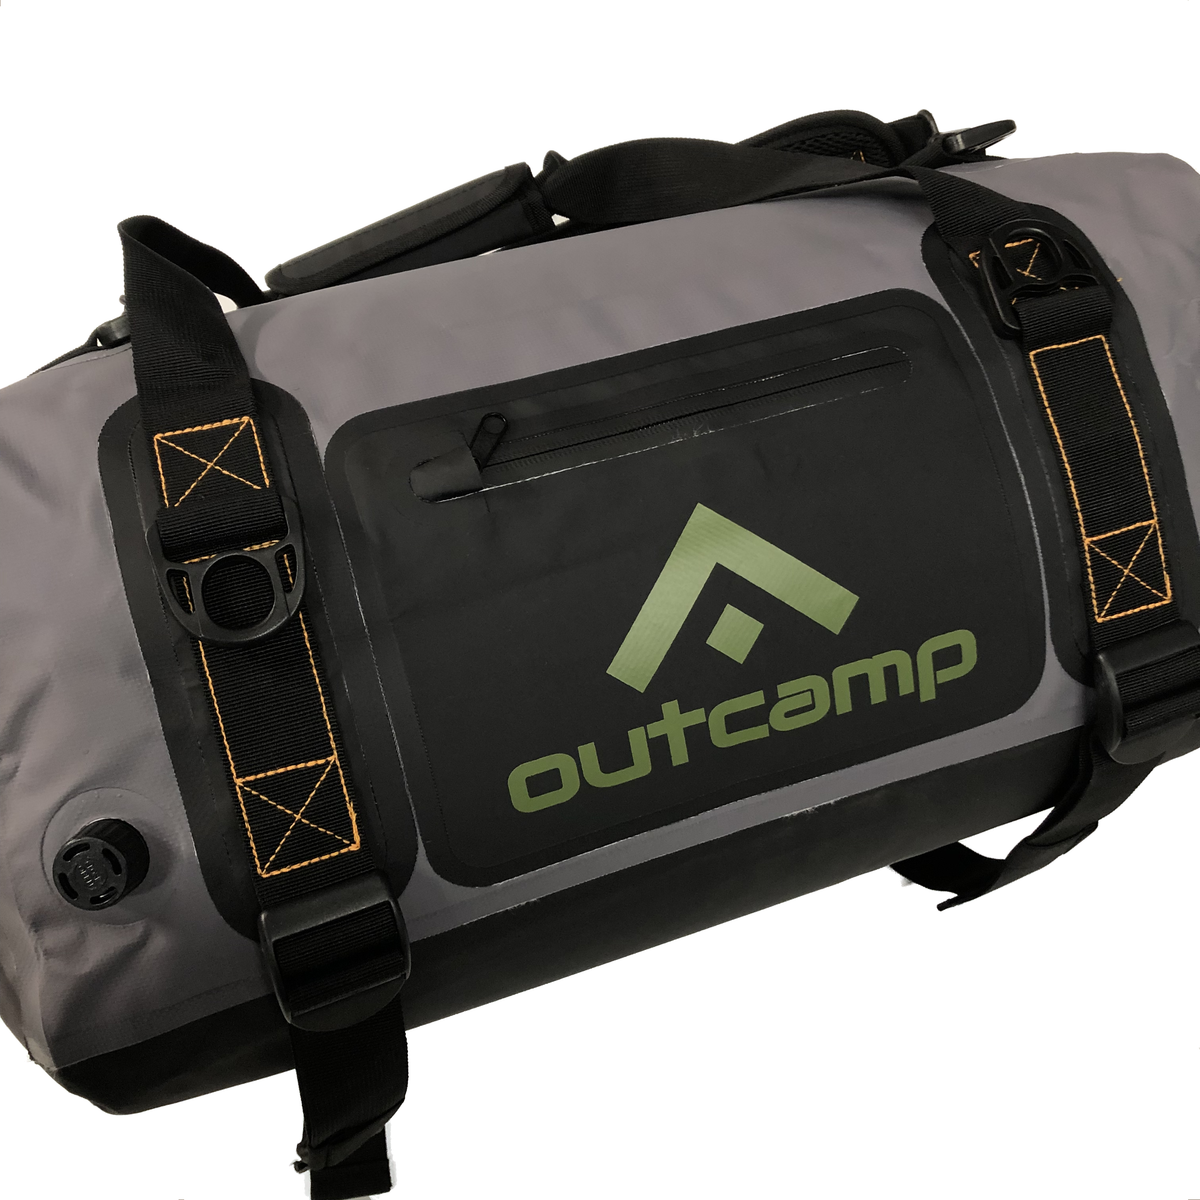 Waterproof camping bag